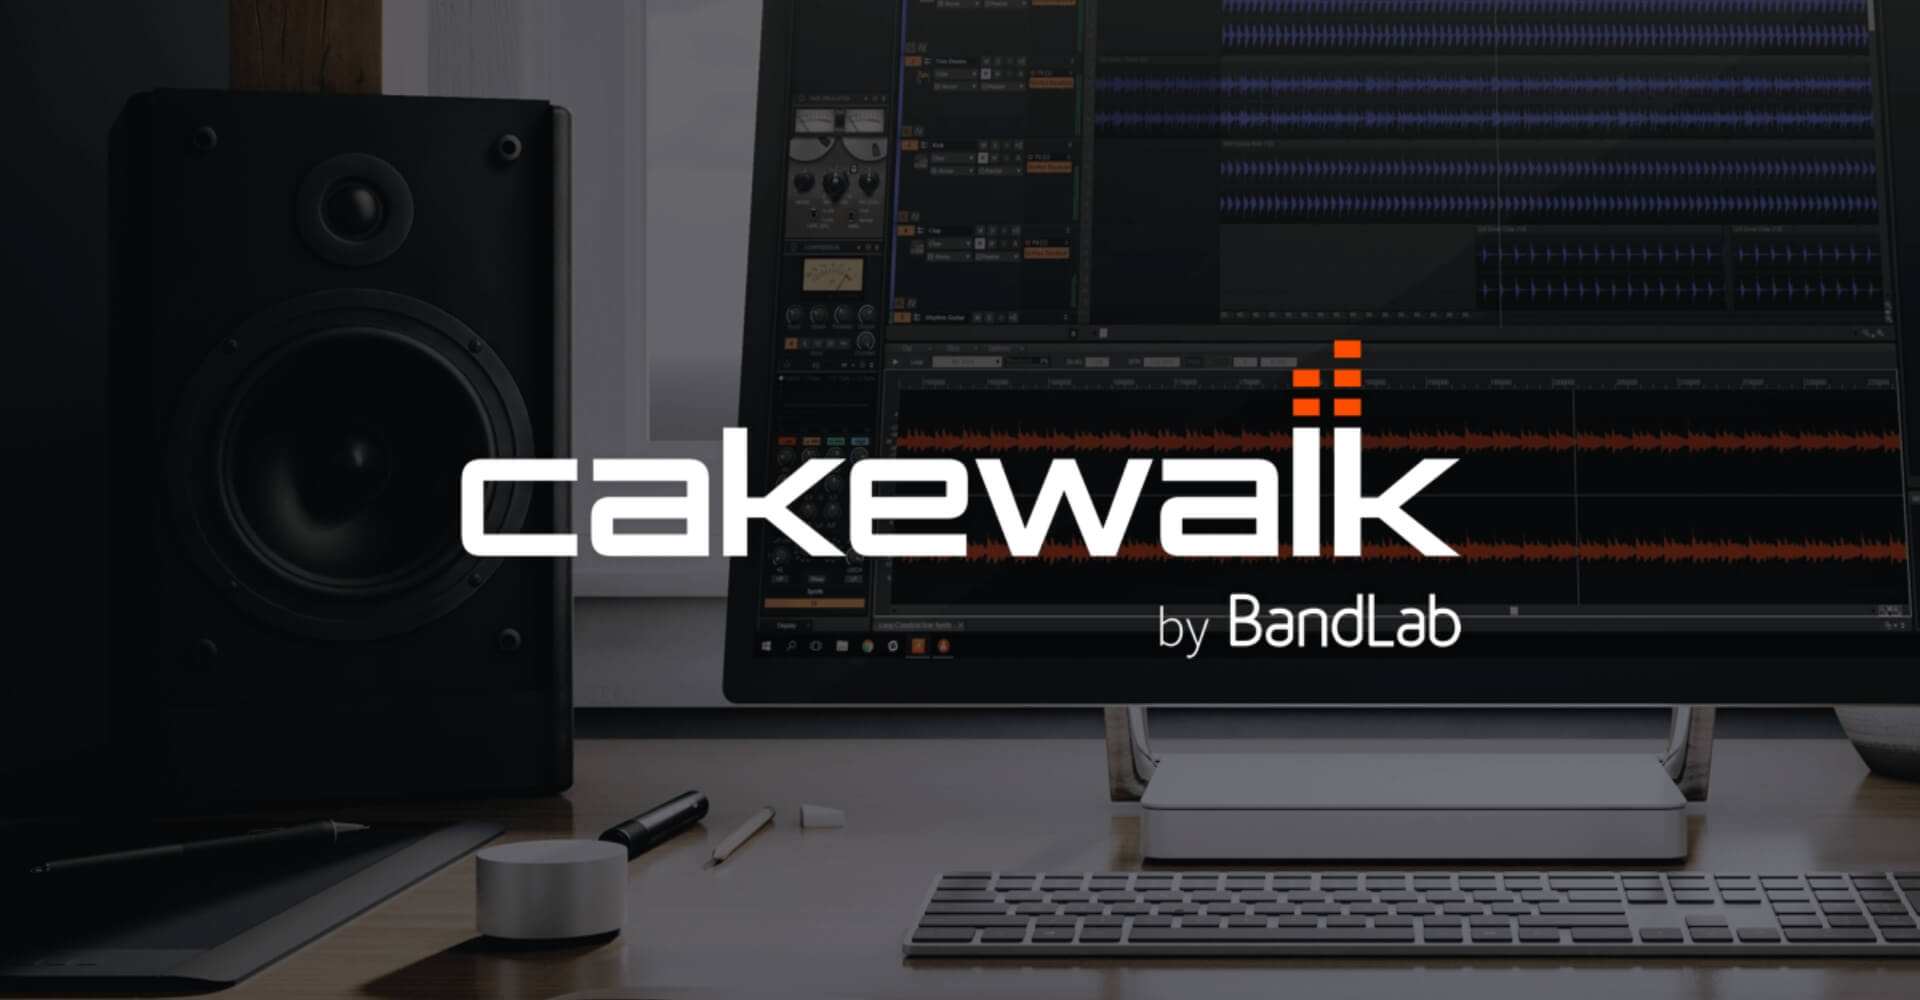 Cakewalk by BandLab promo.